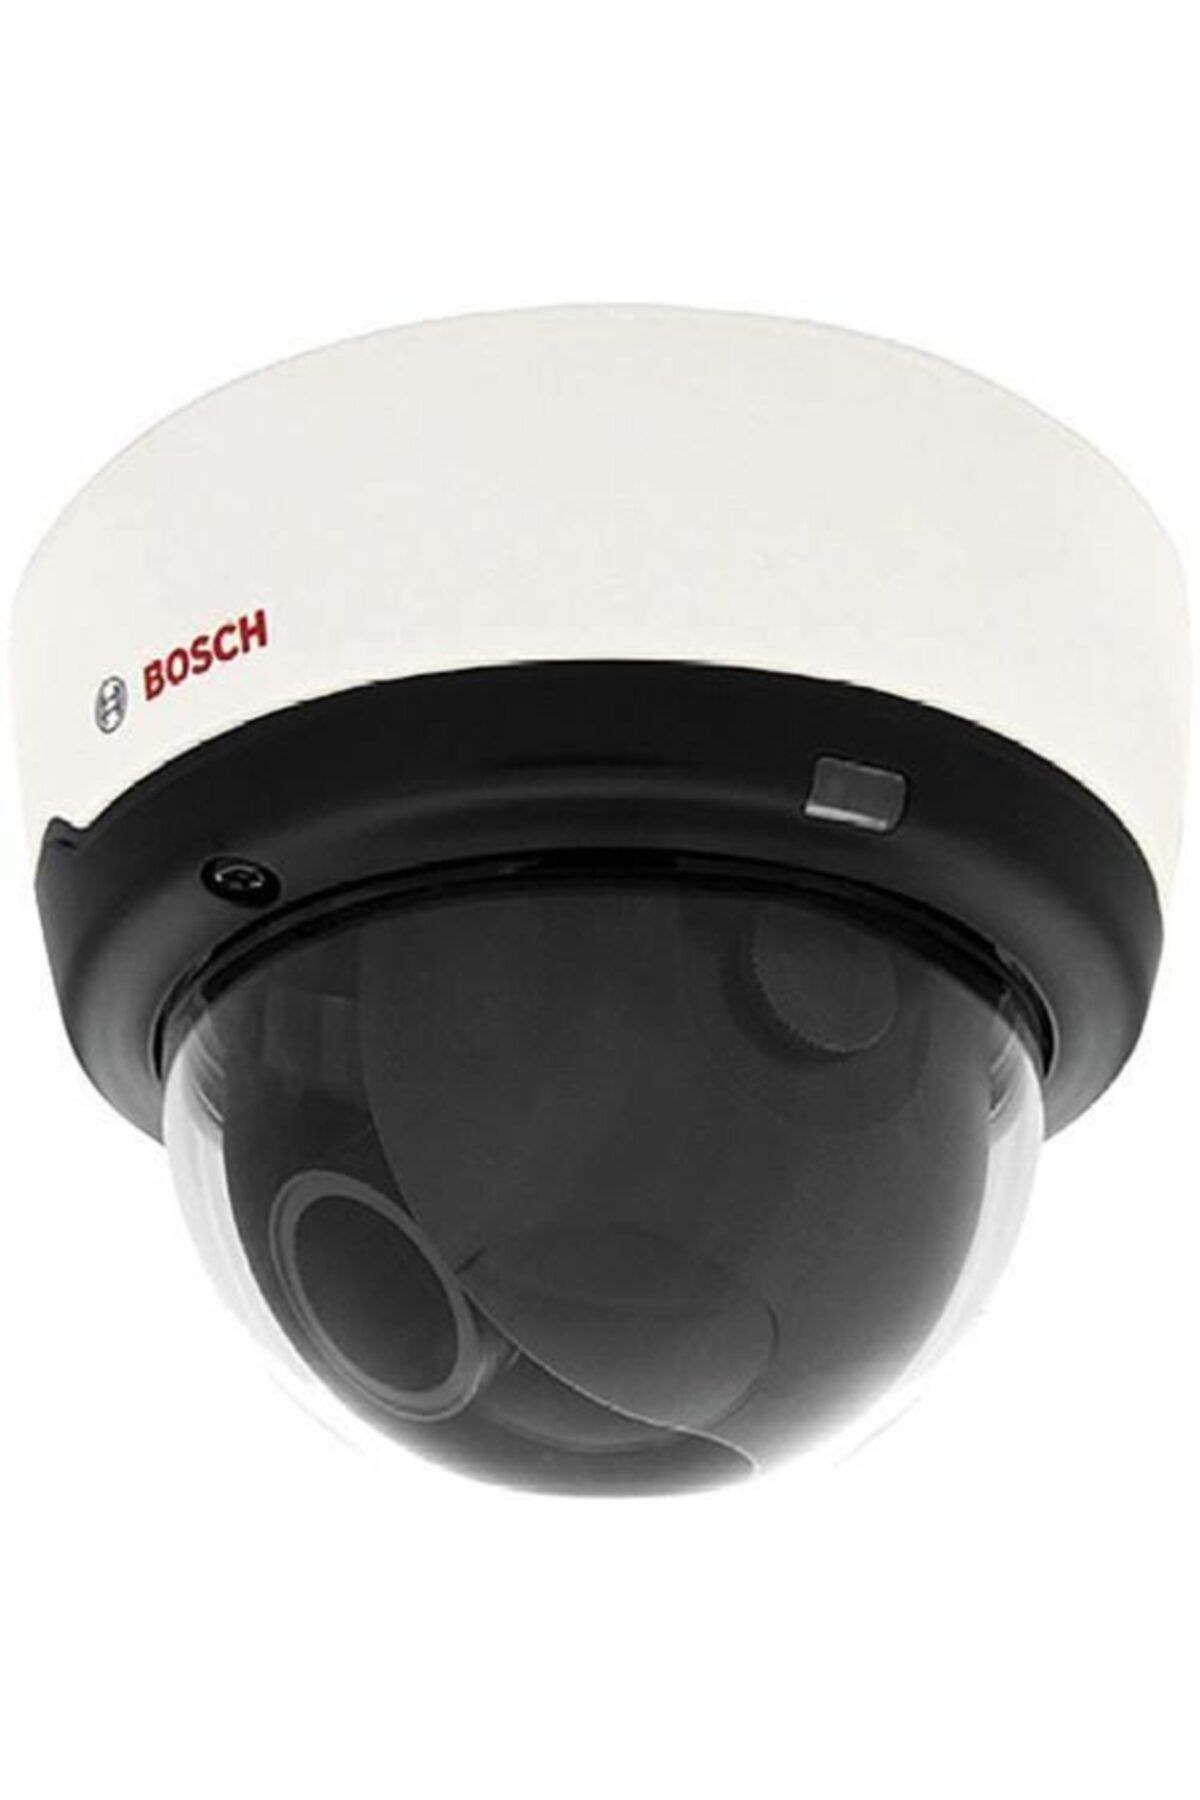 Bosch Ip 200 Dome Kamera (değişken Odaklı 2.8-10mm Lens, F1.2 - Kapat)